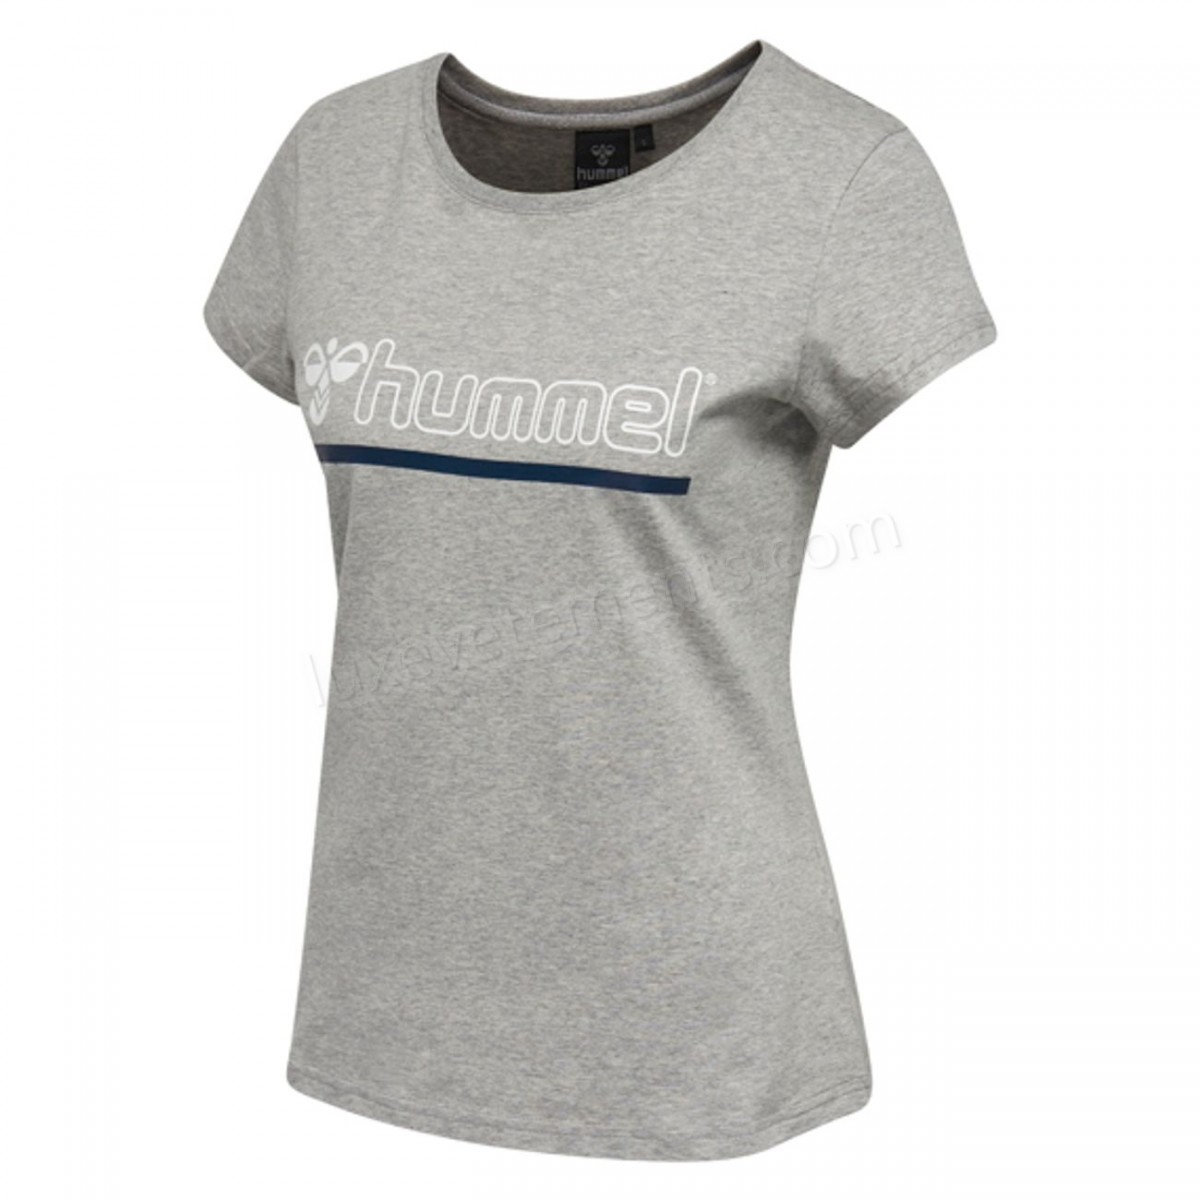 Hummel-Fitness femme HUMMEL T-shirt femme Hummel Classic bee Perla Vente en ligne - -3